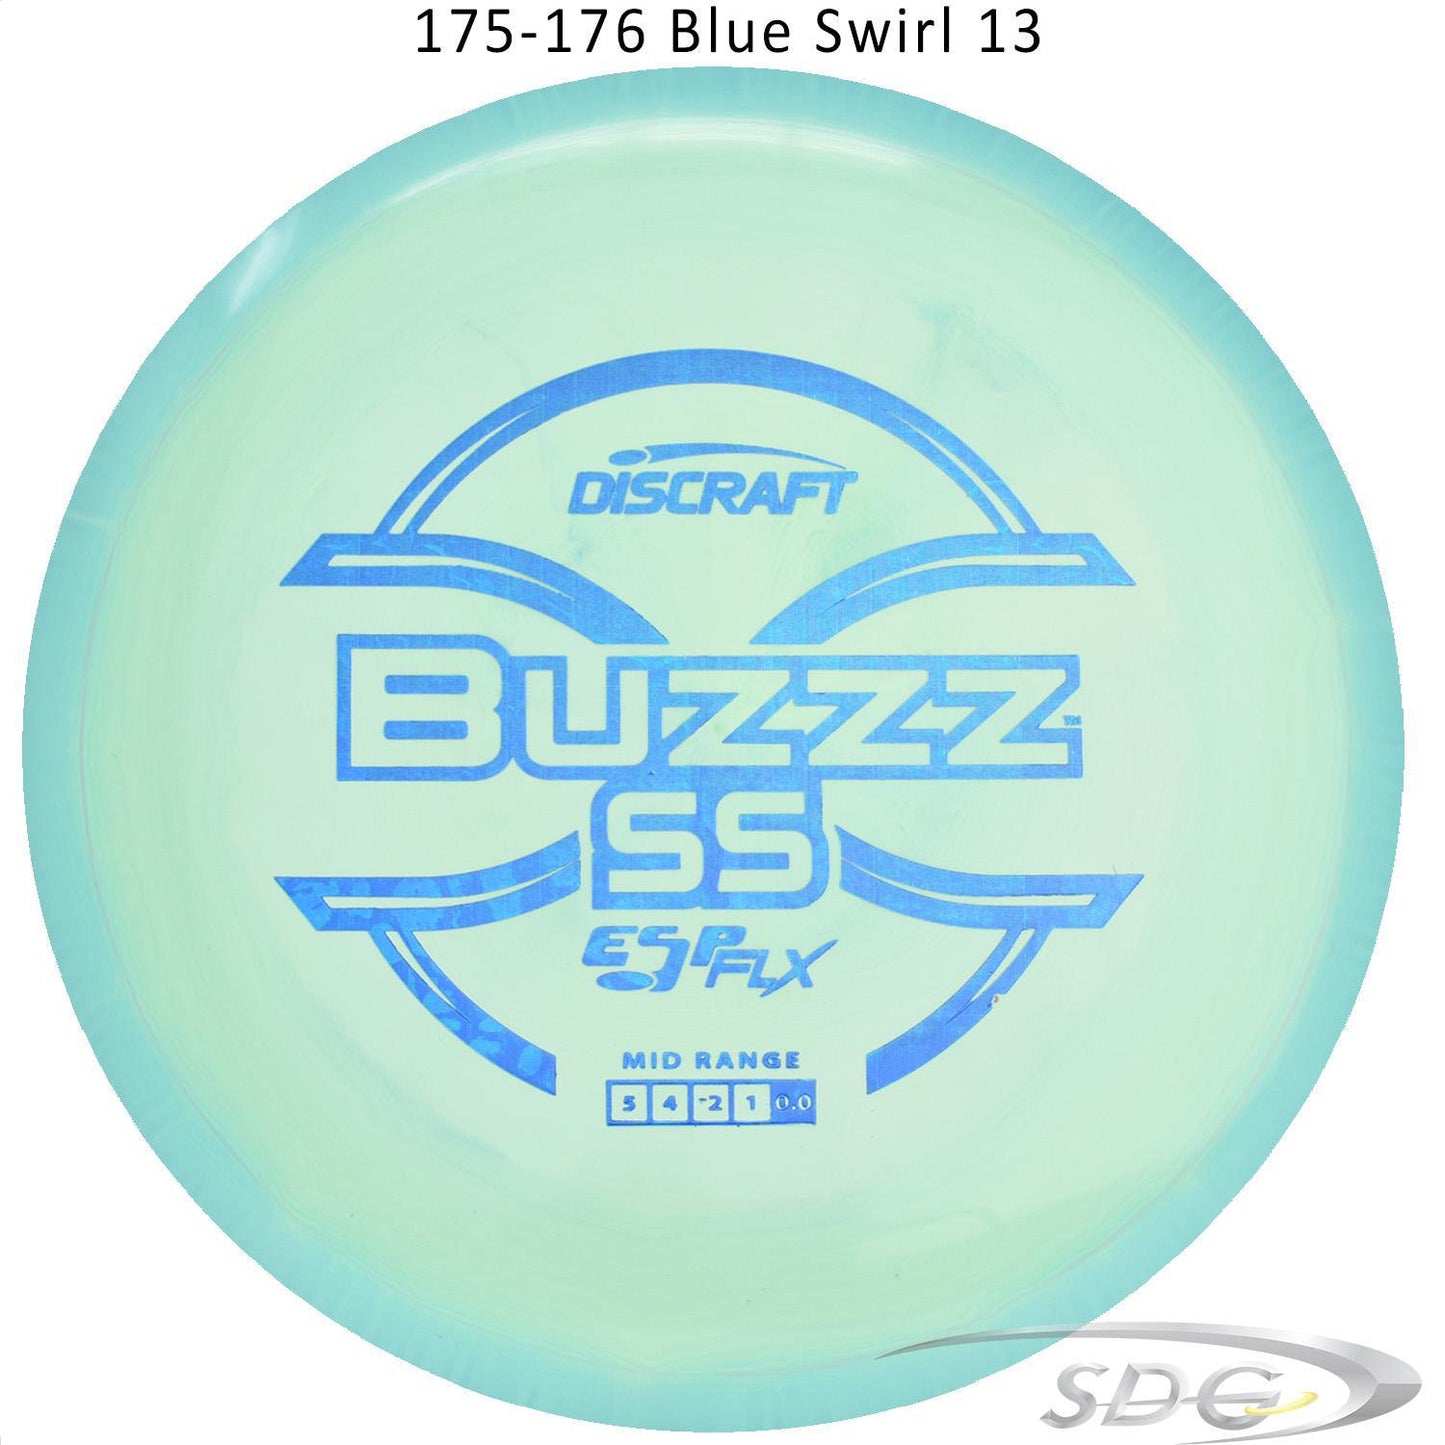 discraft-esp-flx-buzzz-ss-disc-golf-mid-range 175-176 Blue Swirl 13